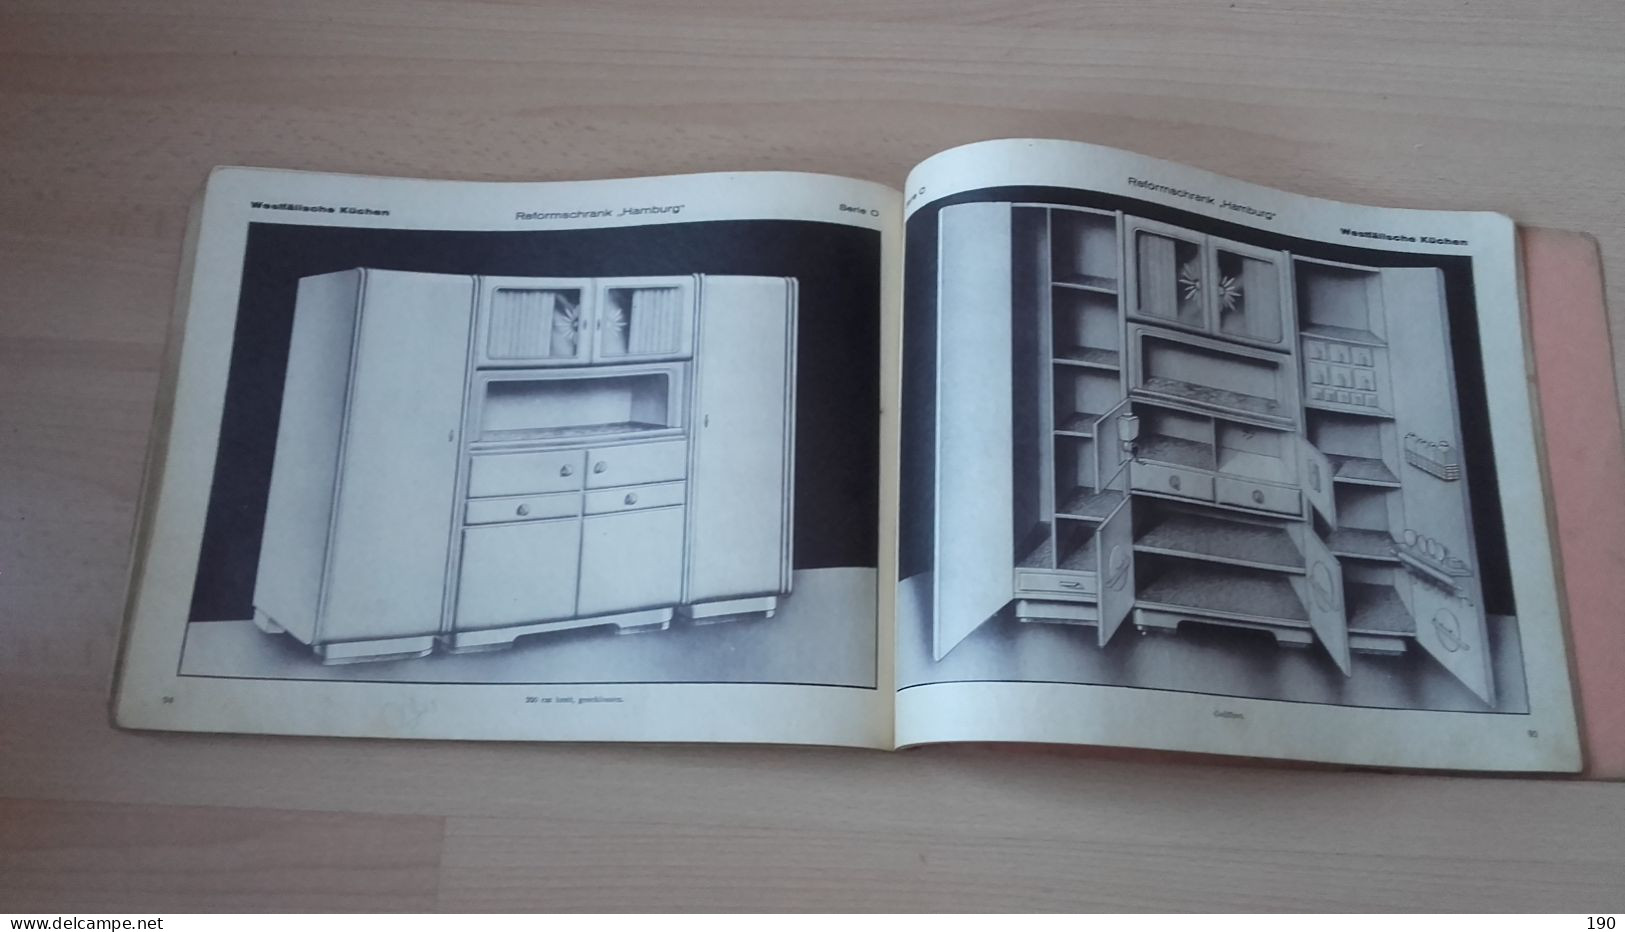 Carton catalogue/catalog of furniture.Katalog der Mobel.Besonders schone modelle qualitats kuchen